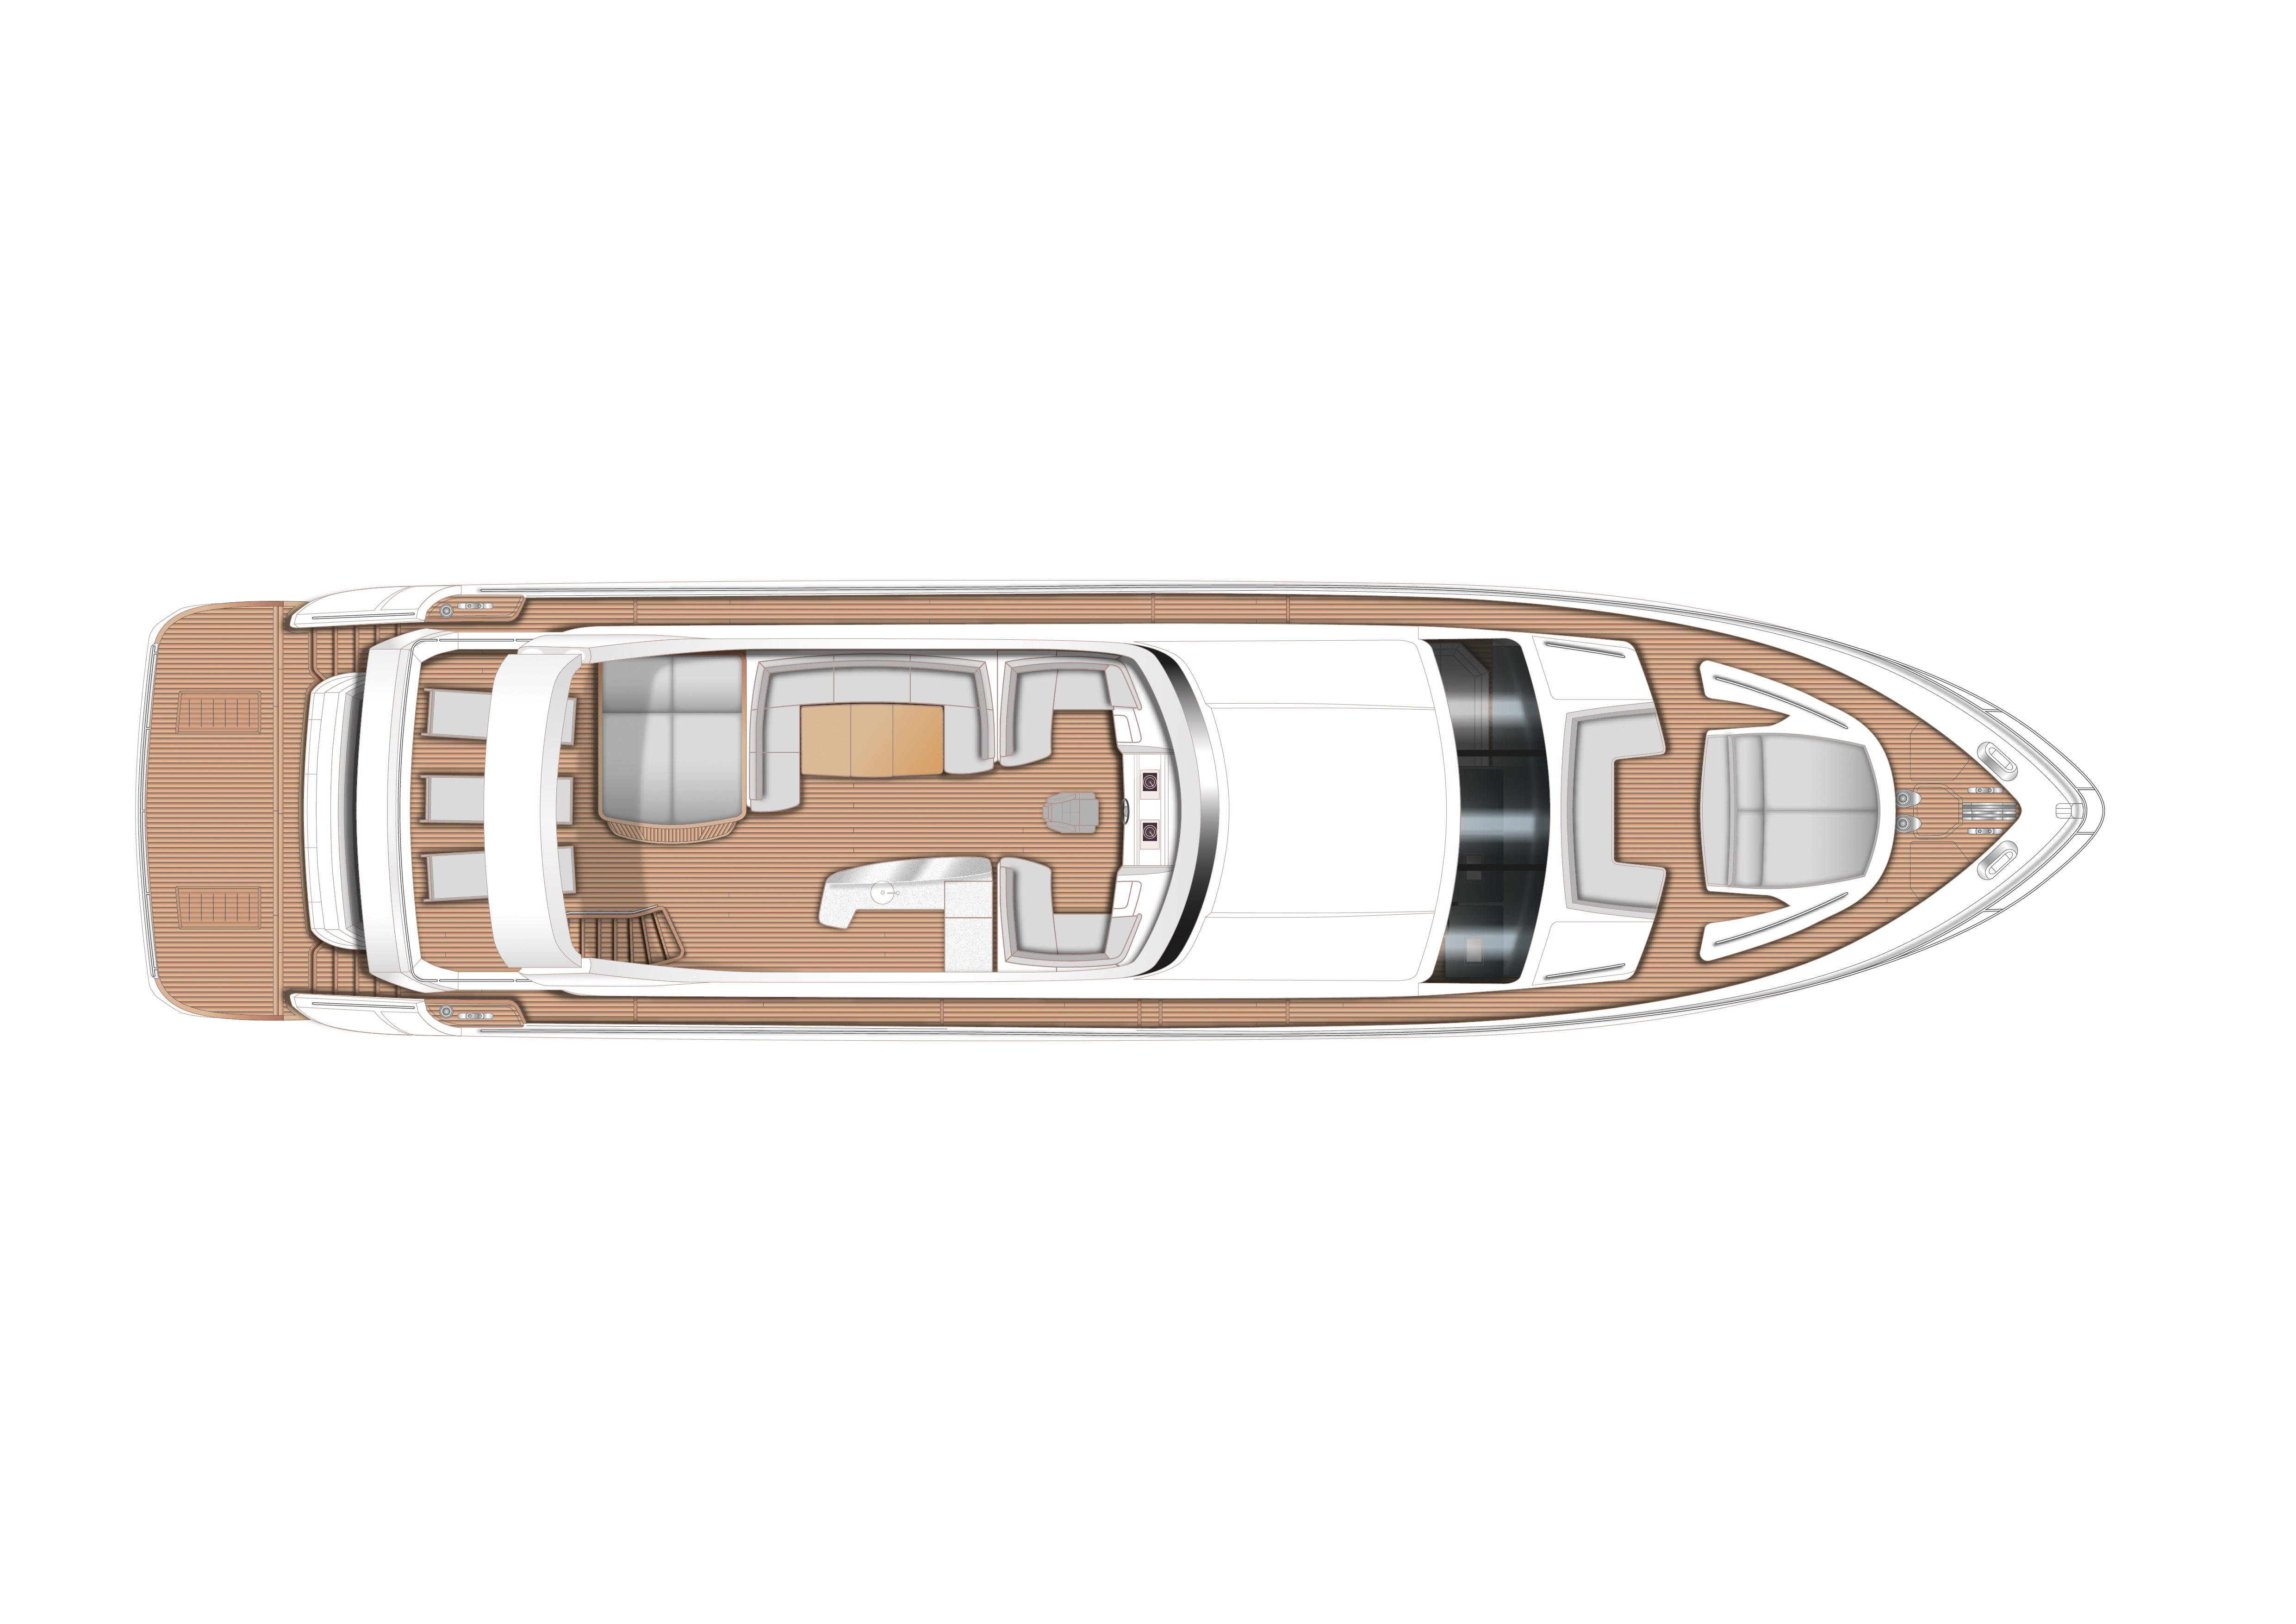 Manufacturer Provided Image: Princess 88 Motor Yacht Flybridge Layout Plan